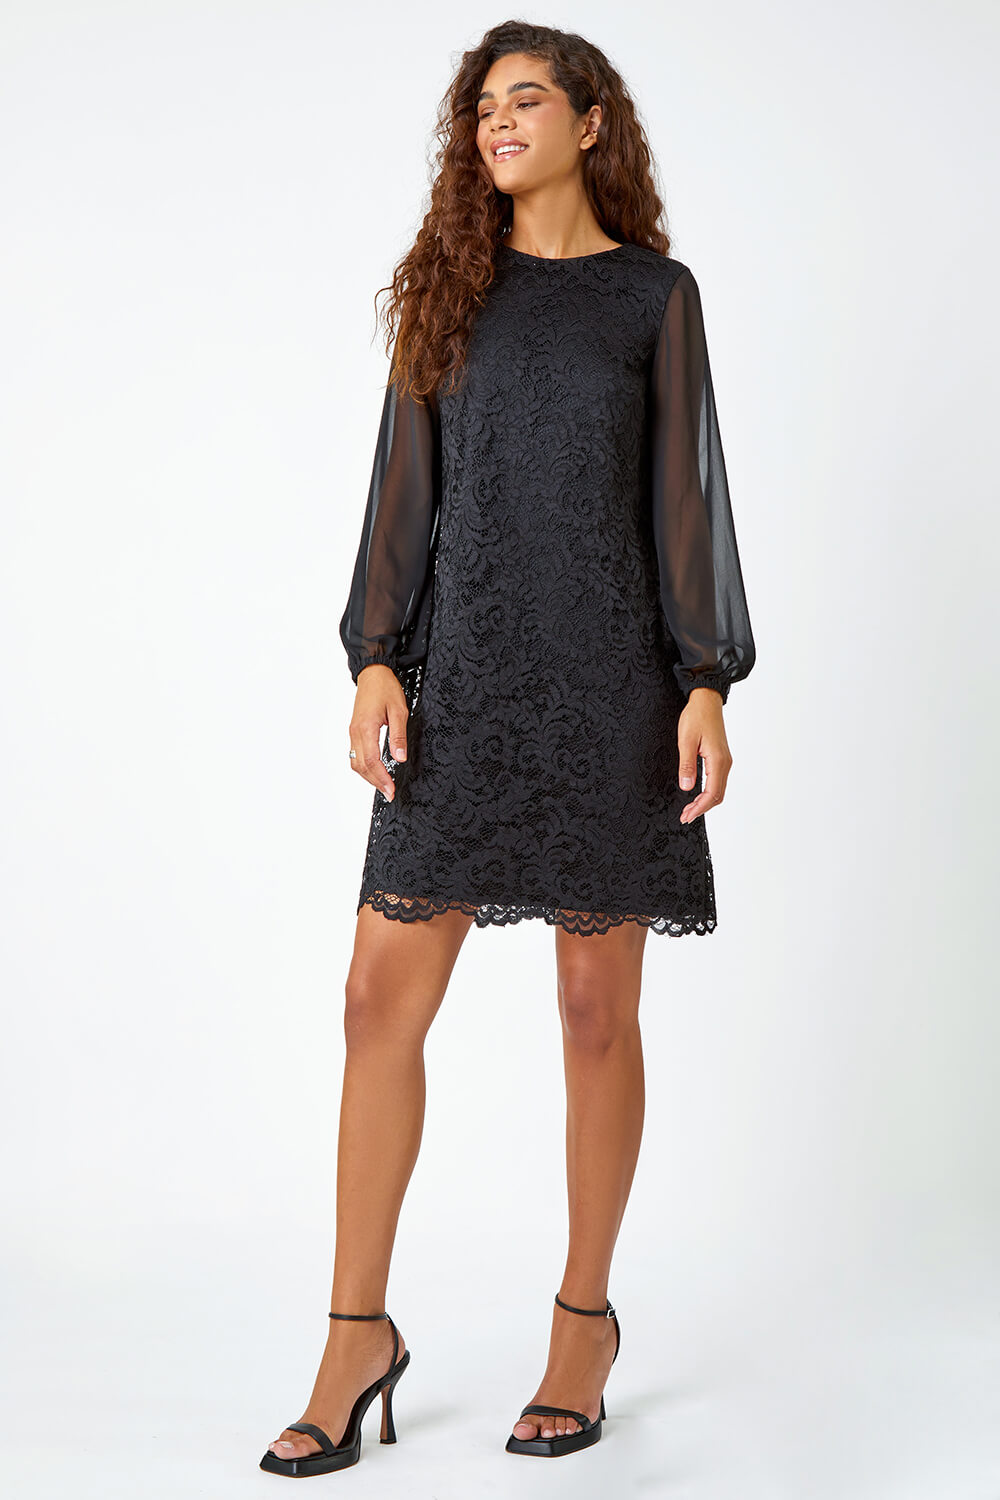 Black Floral Lace Chiffon Sleeve Shift Dress, Image 2 of 5